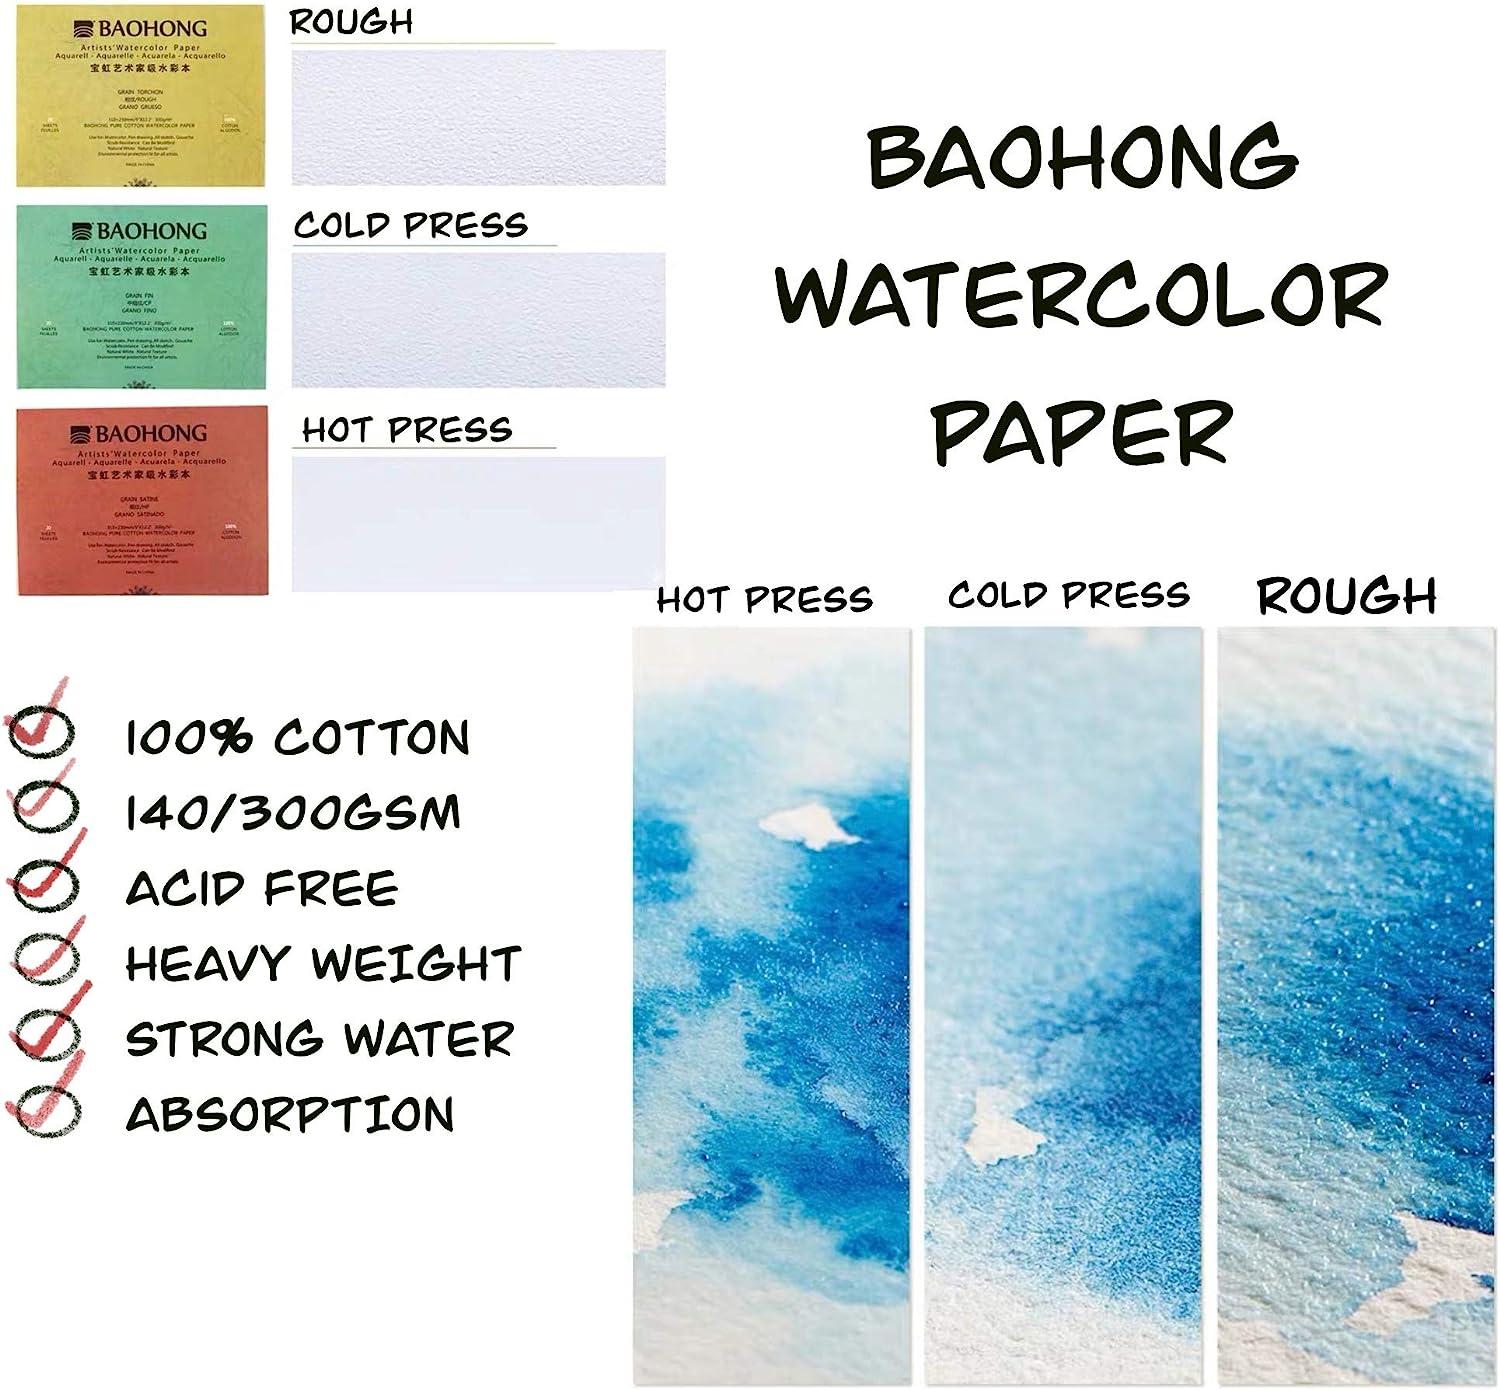 Baohong The Master's Choice - 100% cotton watercolour paper